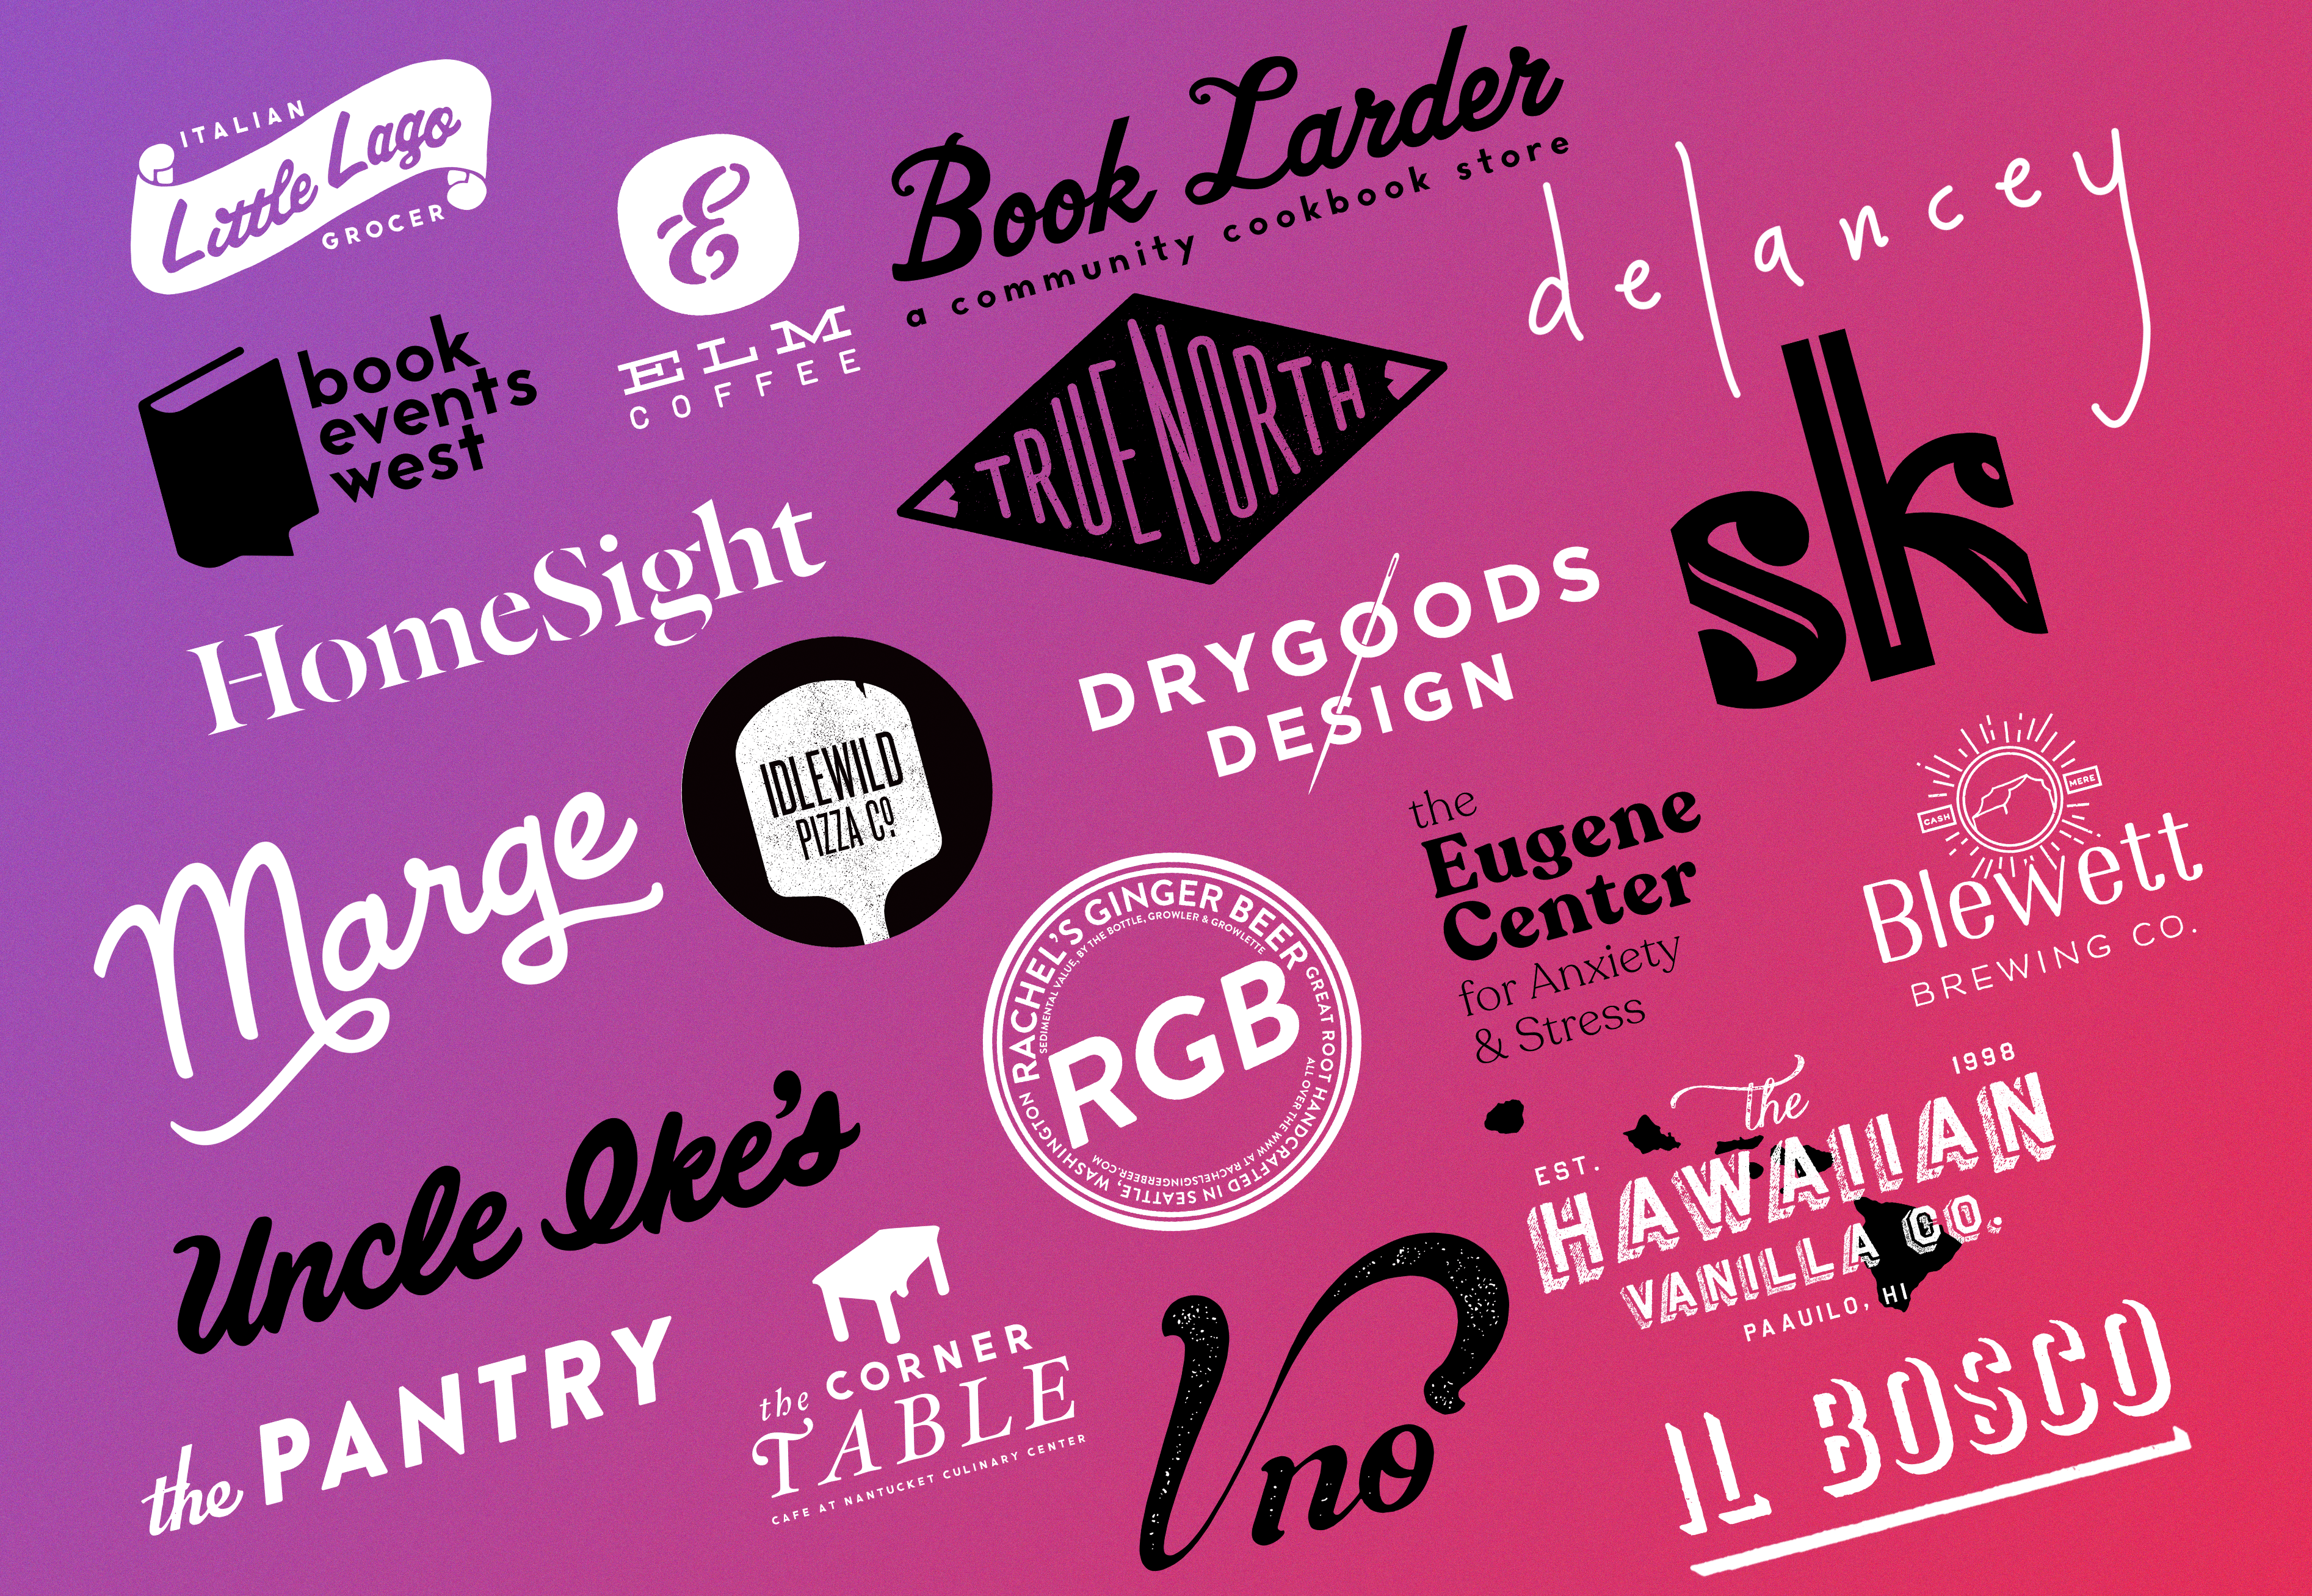 Various logos designed by Neversink